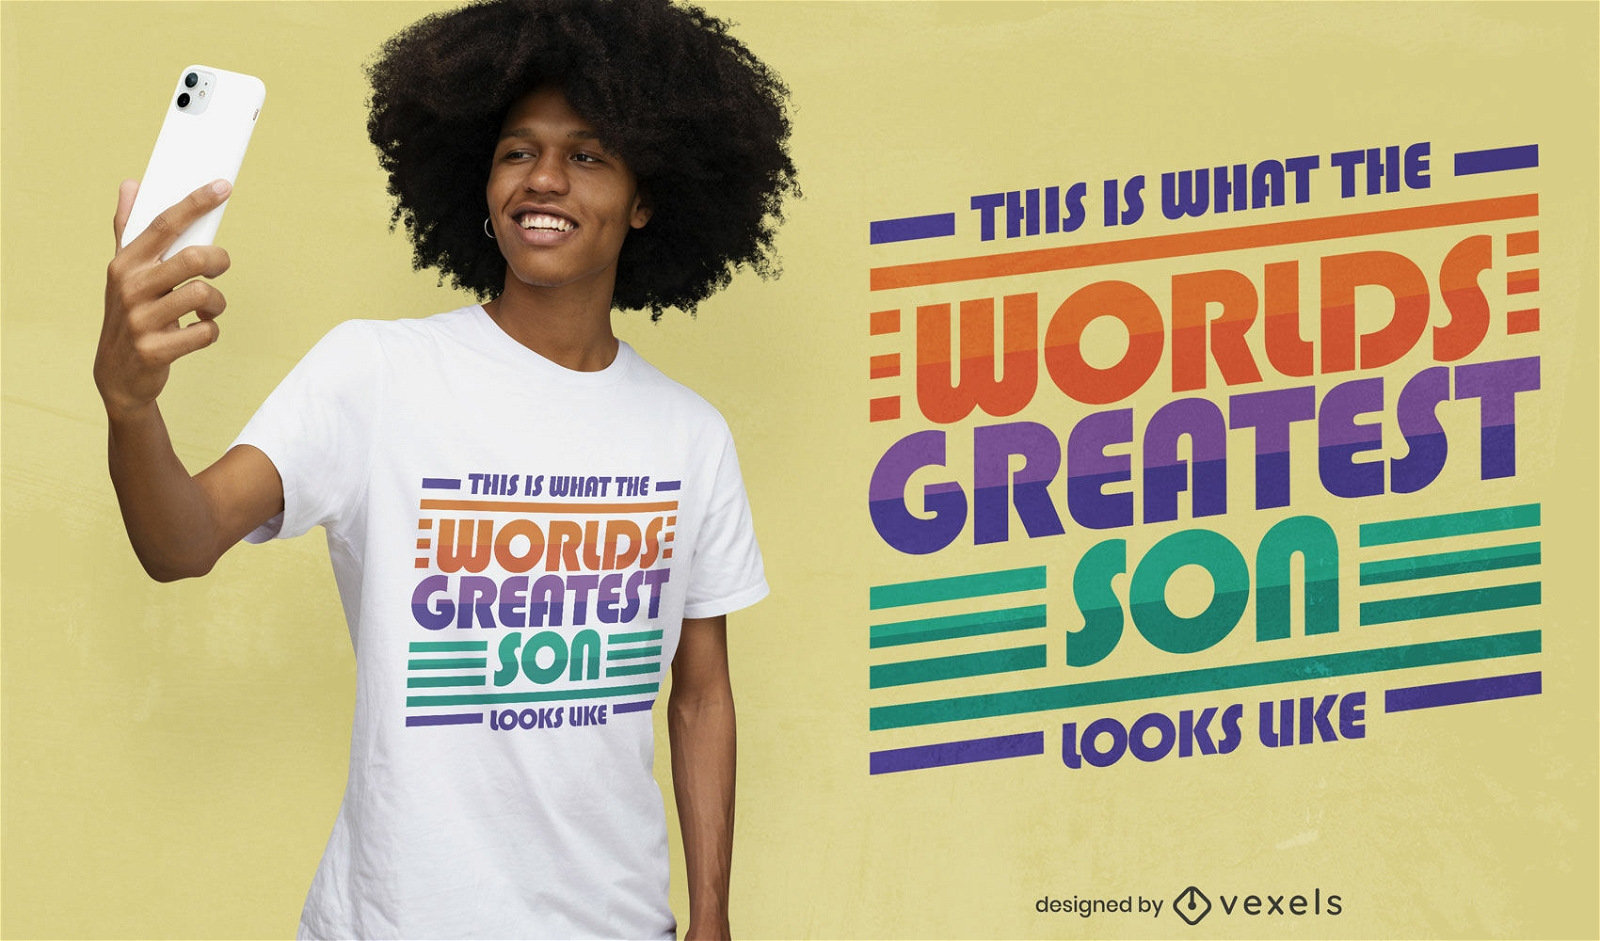 World's gratest son t-shirt design